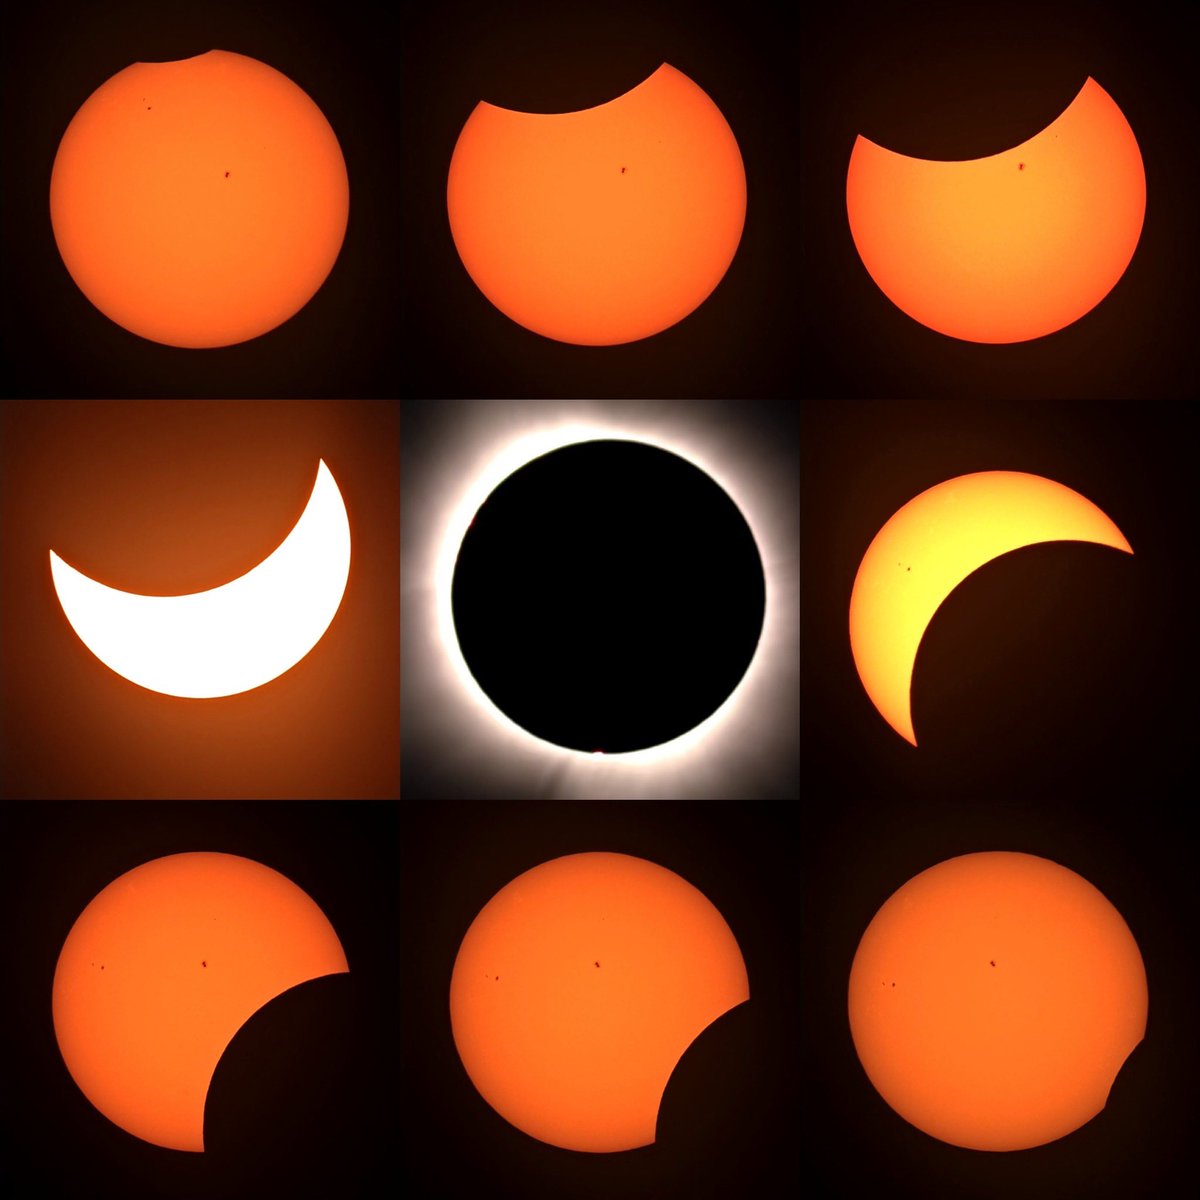 One last photo series from #Eclipse #SolarEclipse2024 #Eclipse2024 

Taken by my wonderful husband in Walnut Ridge, AR.

#AcademicTwitter #ScienceTwitter